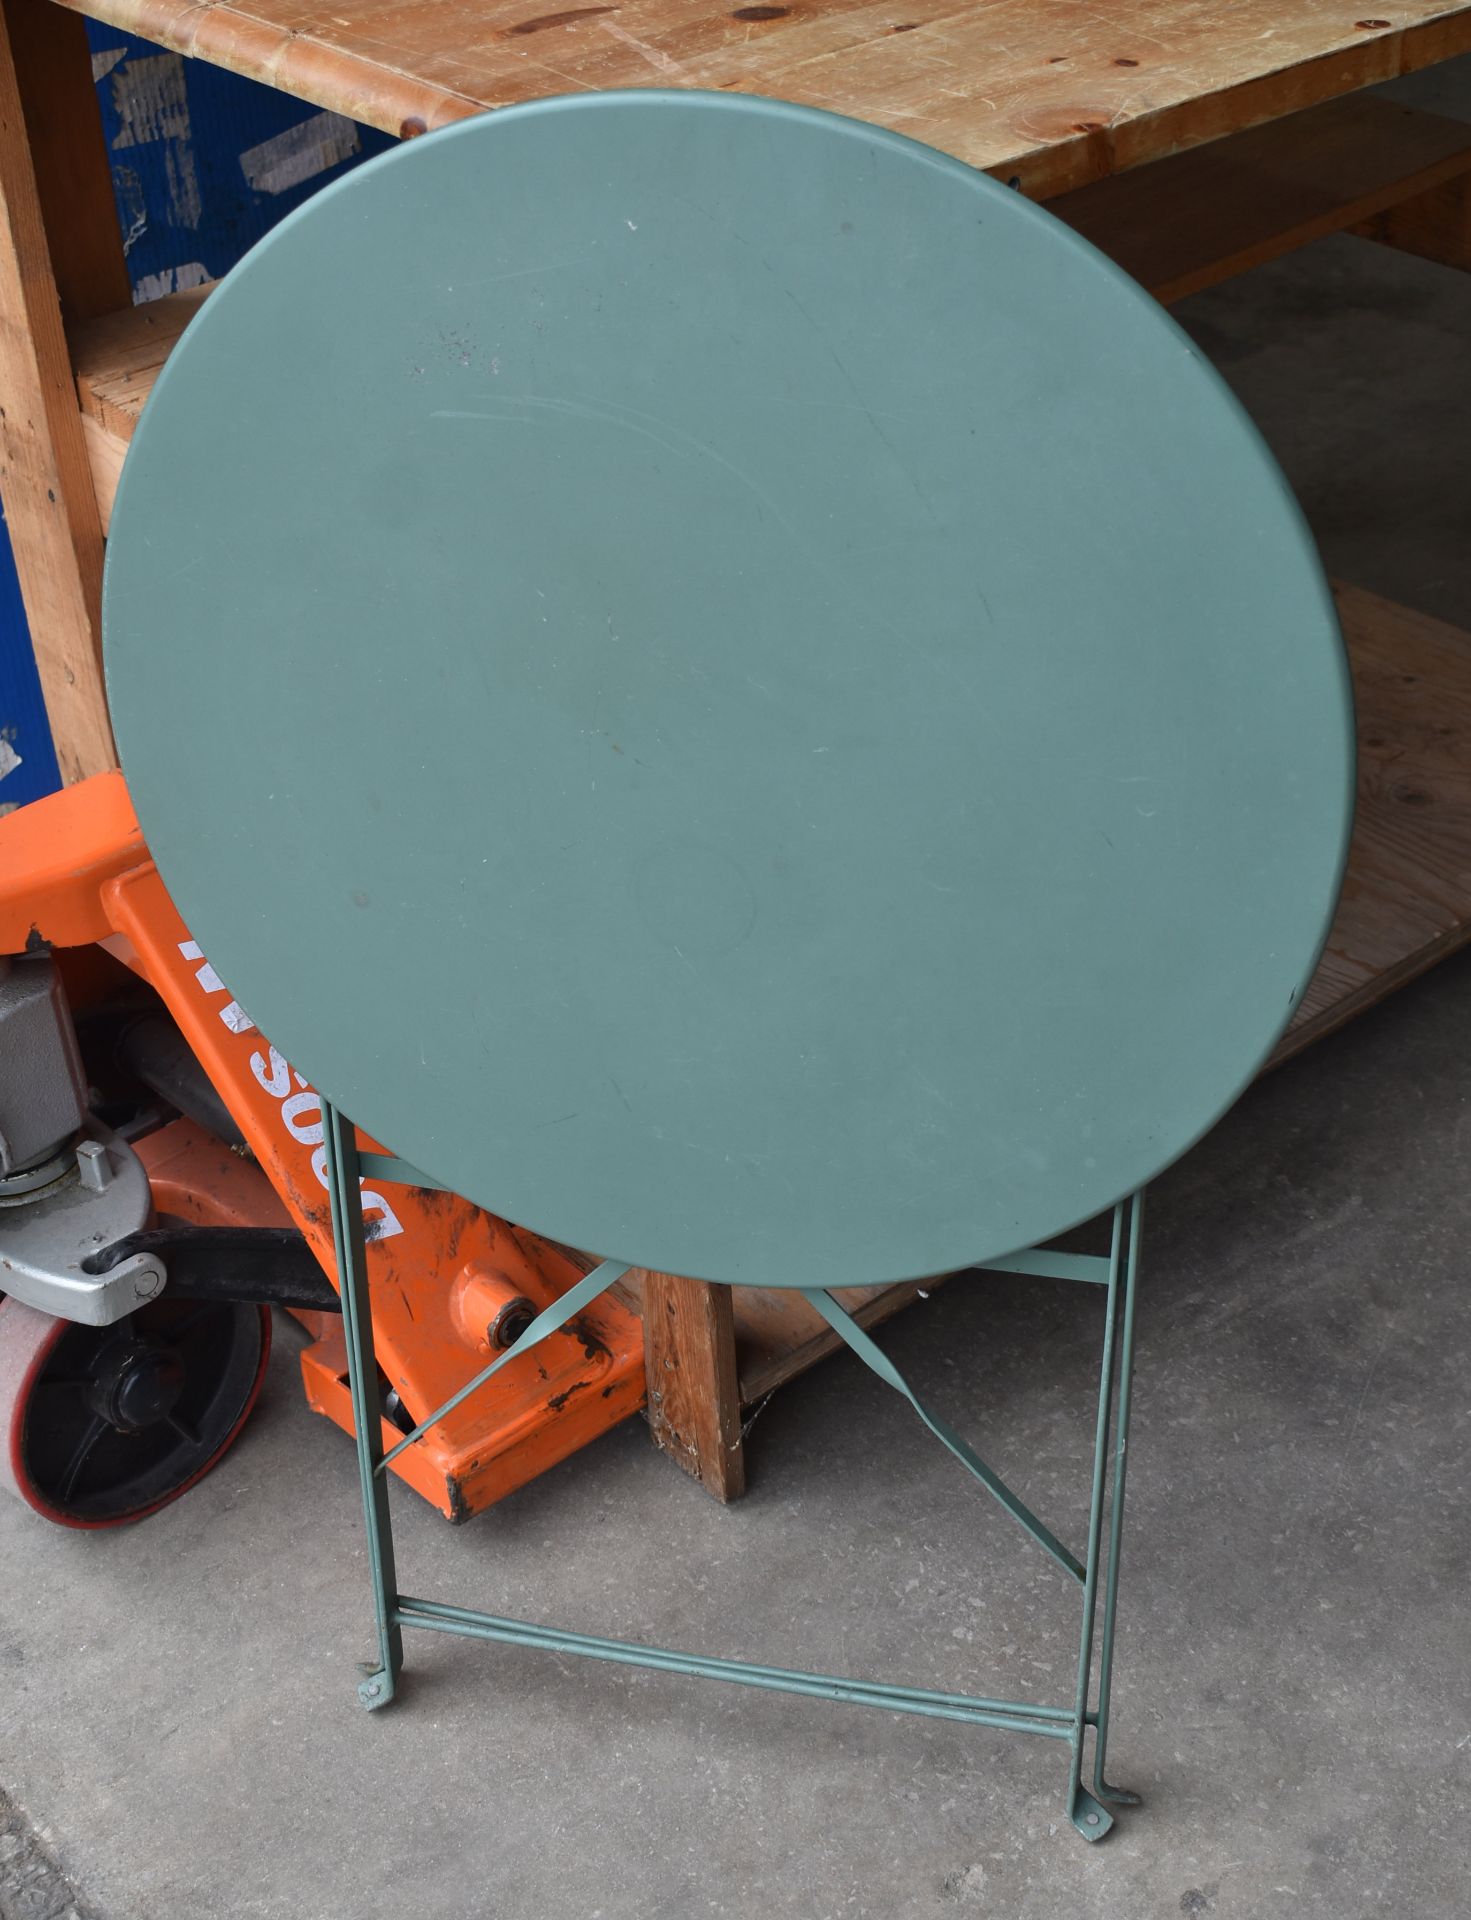 1 x Round Foldaway Green Metal Garden Table - 60 (D) x 71 (H) cms - Ref: K235 - CL905 - Location: Al - Image 10 of 10